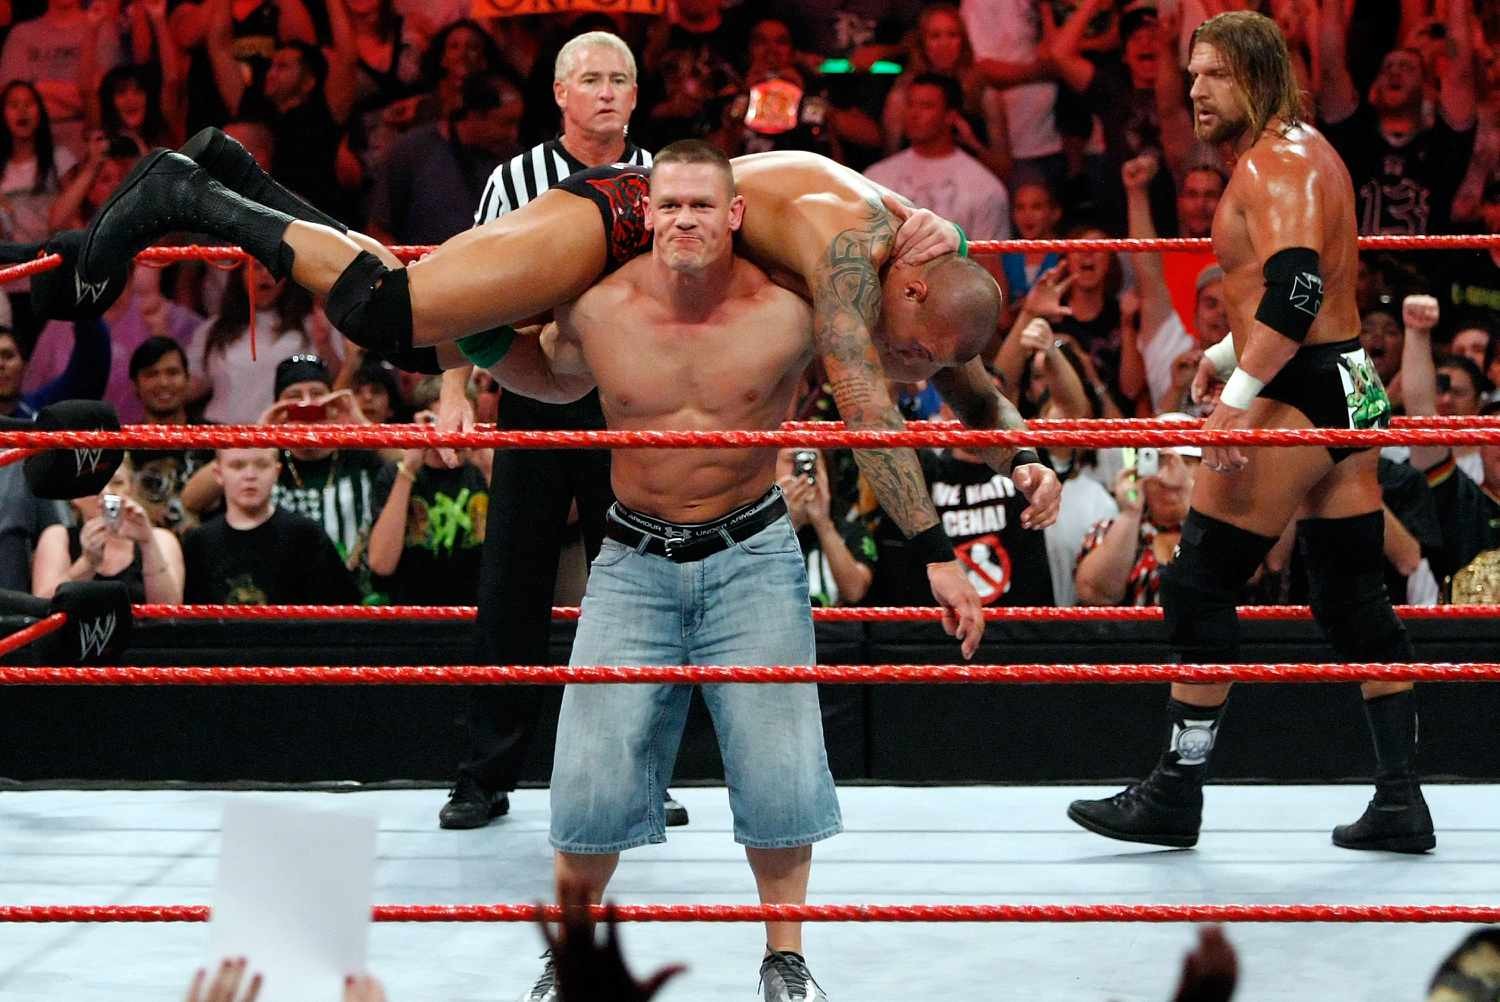 John Cena in WWA ring (Image via People)